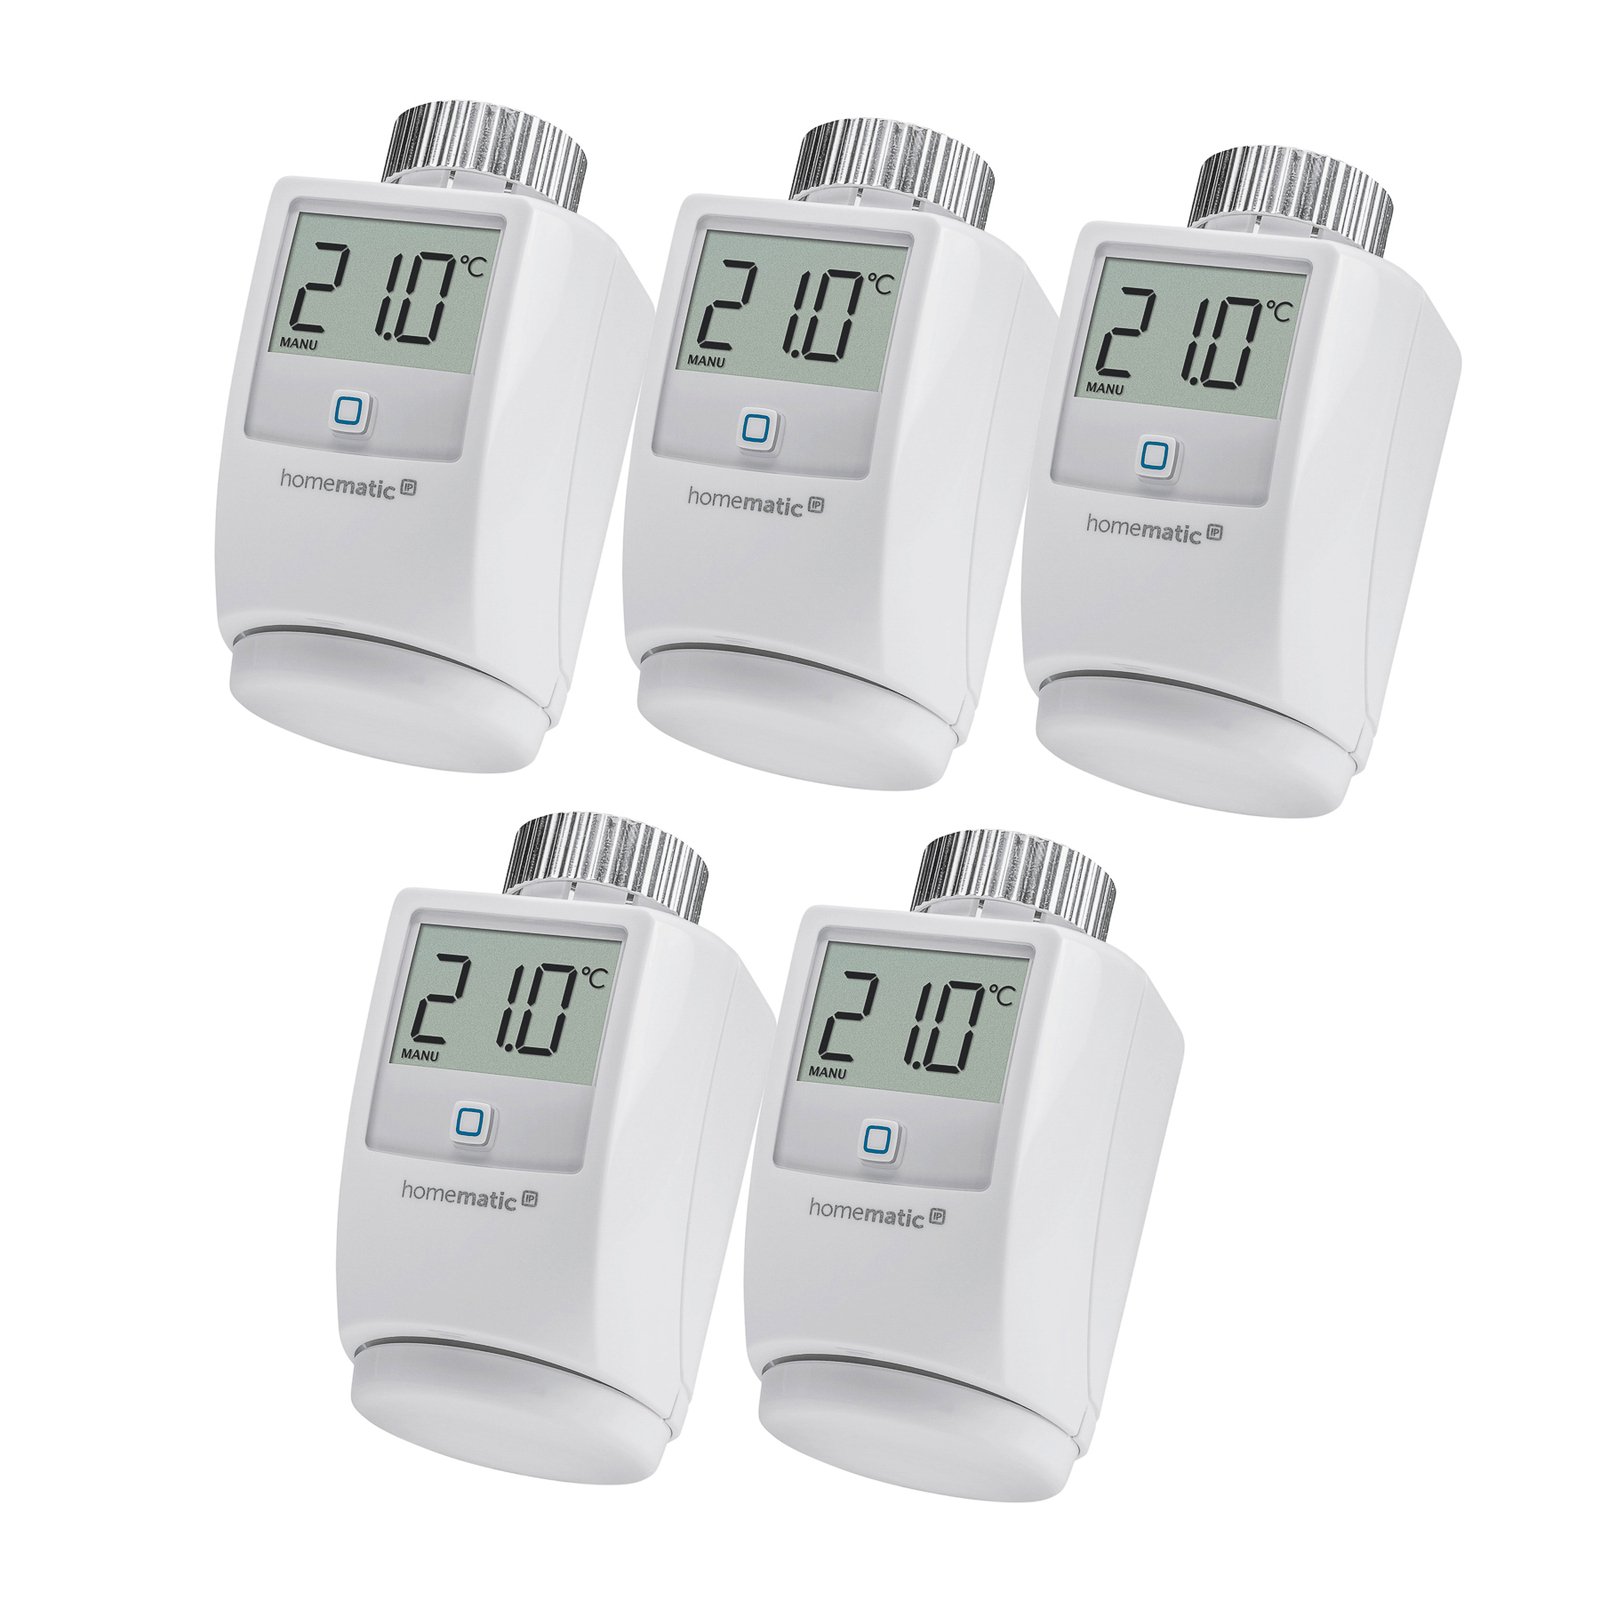 5 x Homematic IP radiator thermostat